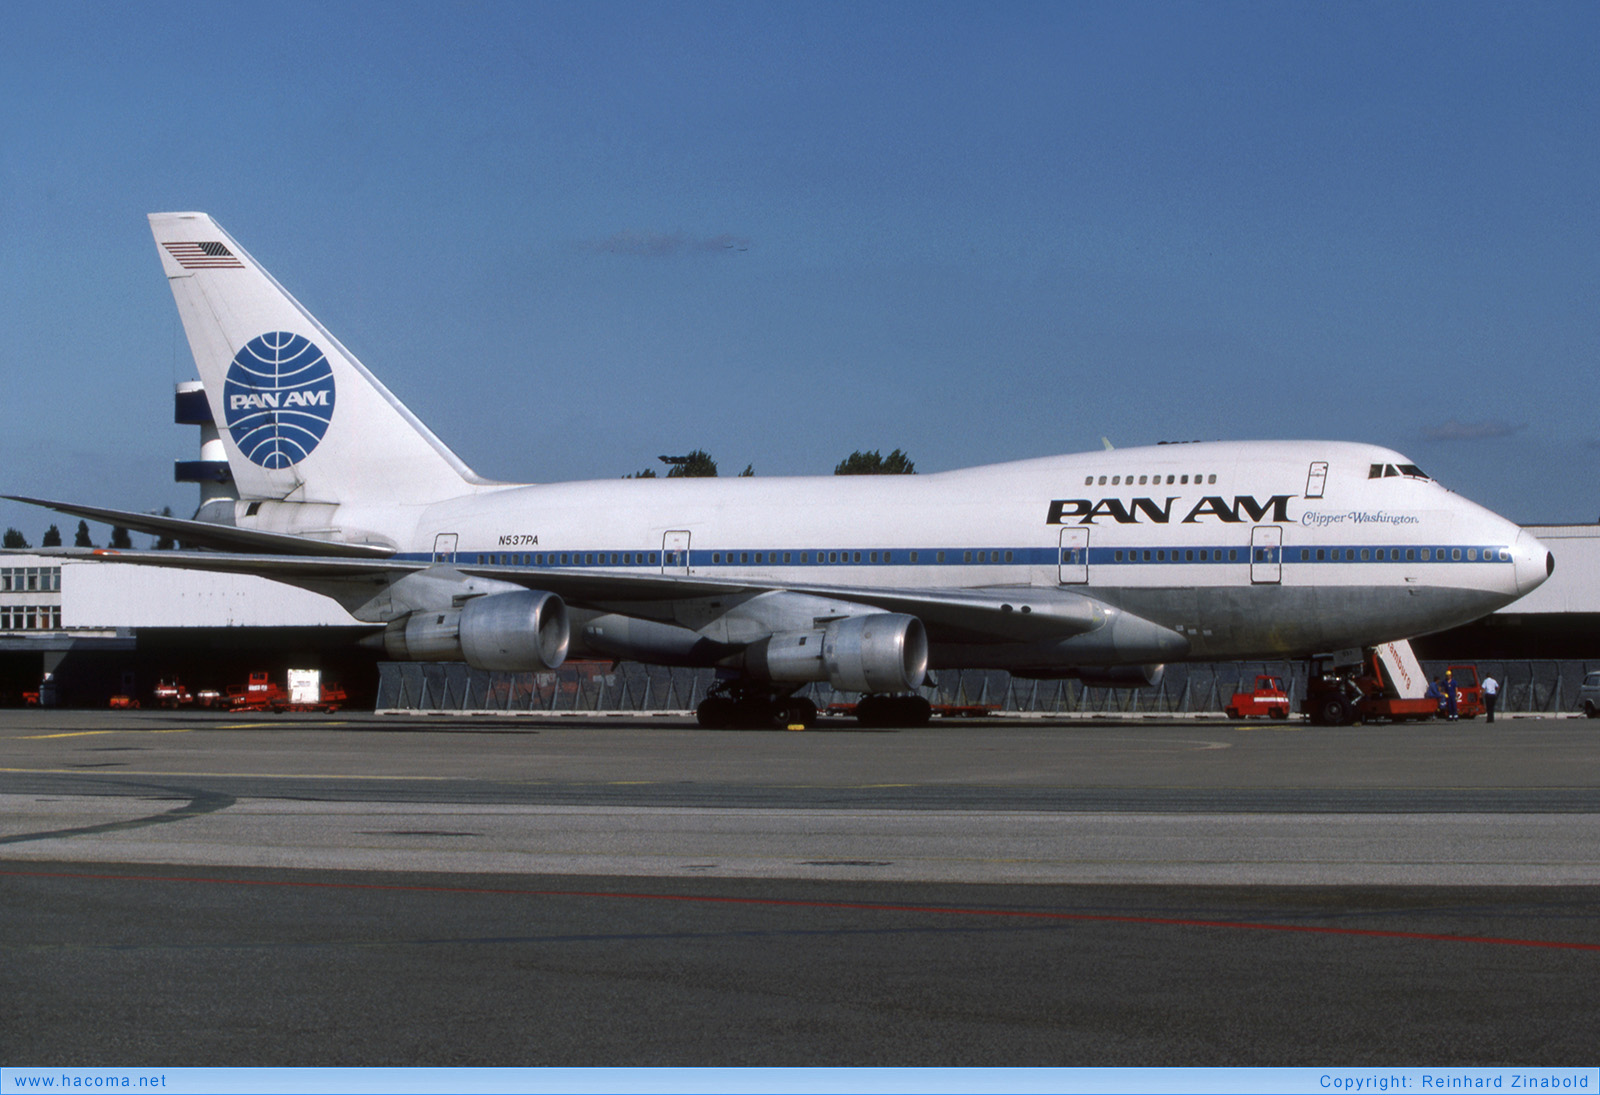 Photo of N537PA - Pan Am Clipper High Flyer / Washington - Hamburg Airport - Aug 1983